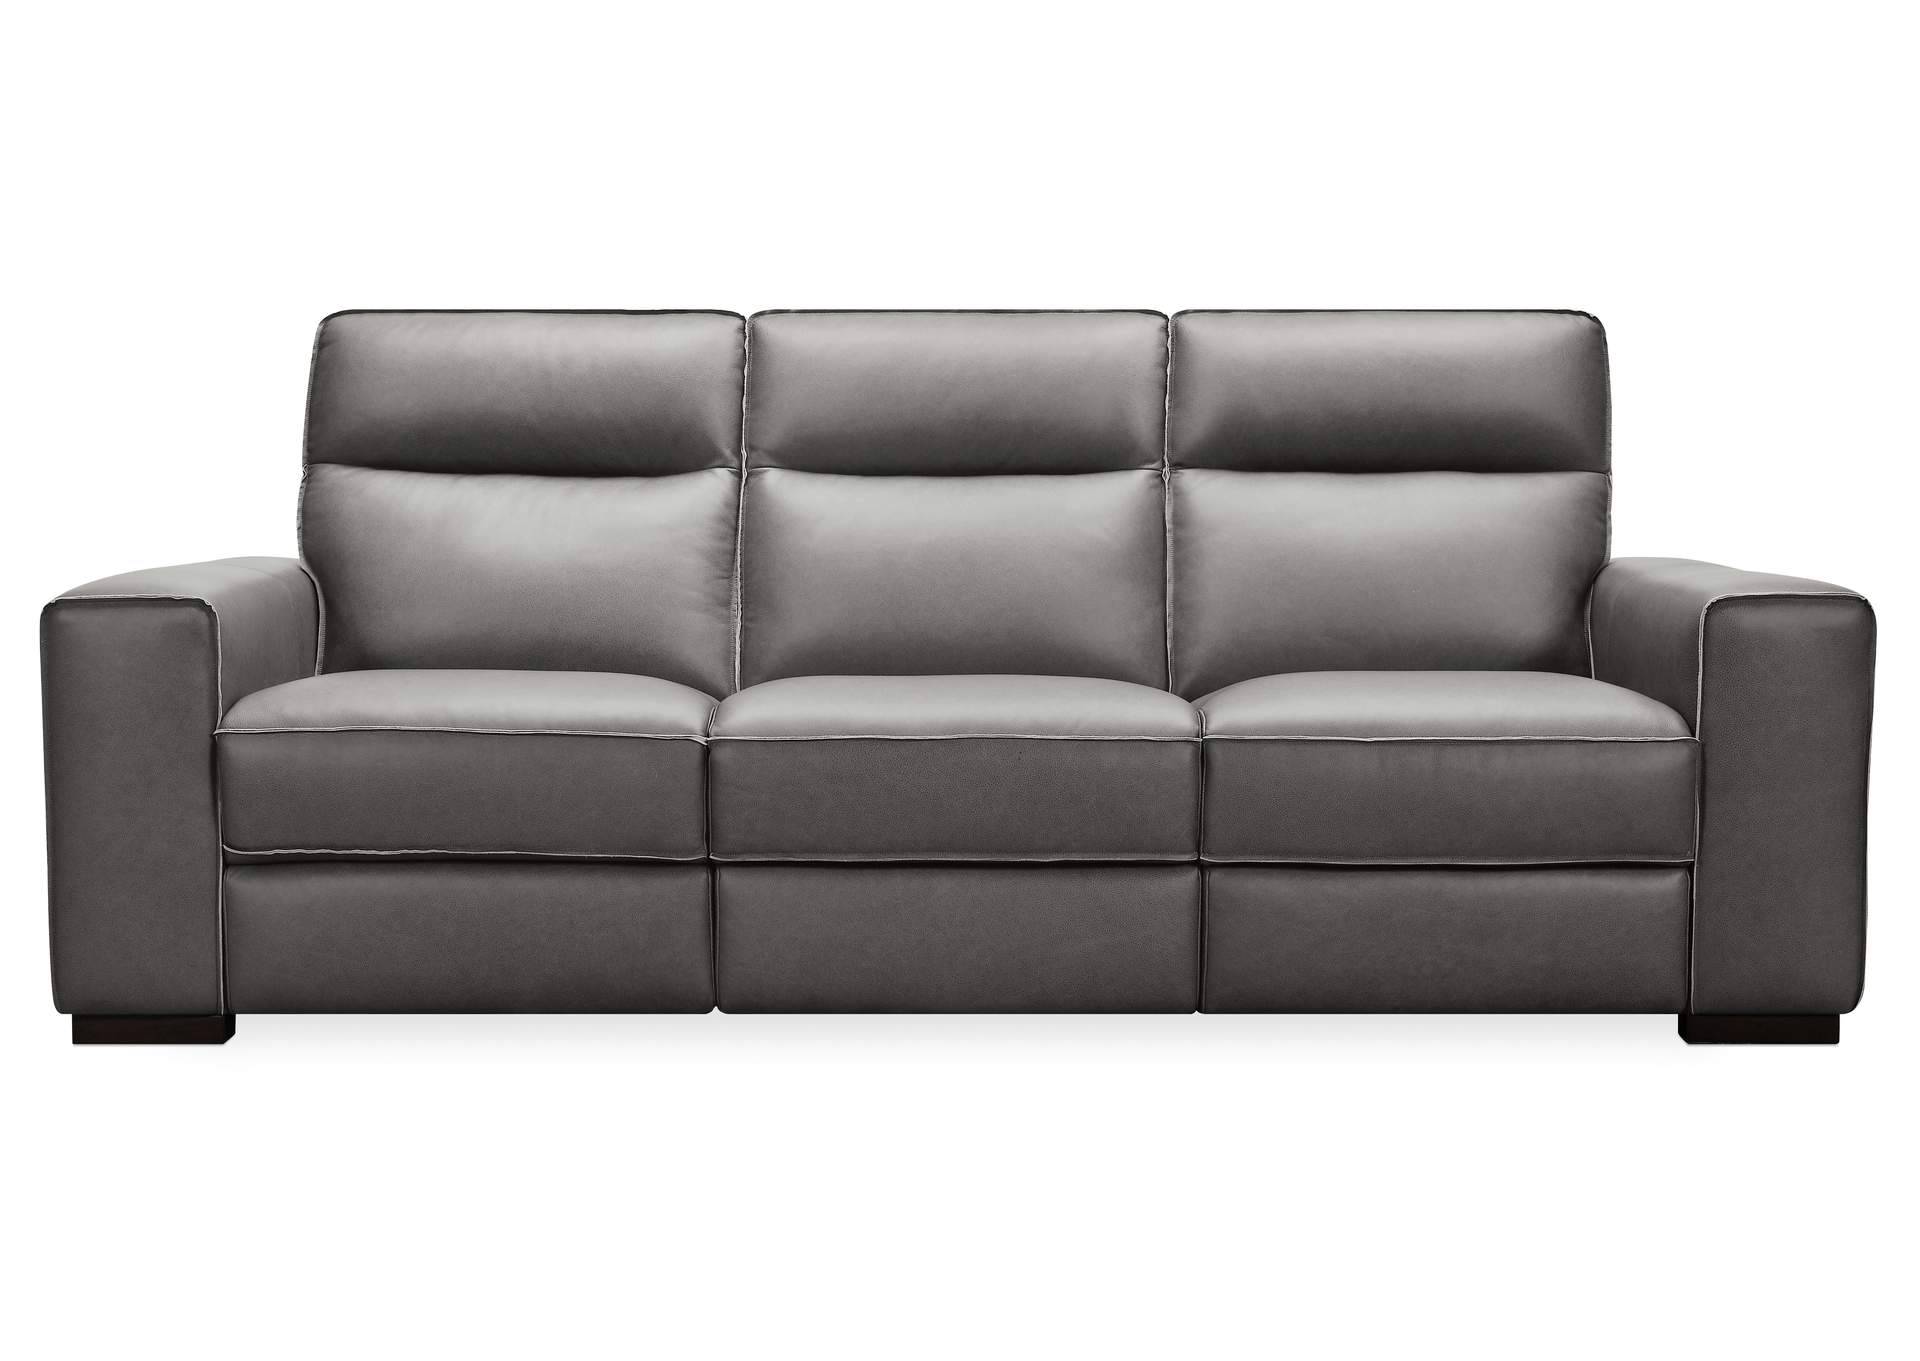 Braeburn Leather Sofa W - Power Recline Power Headrest,Hooker Furniture